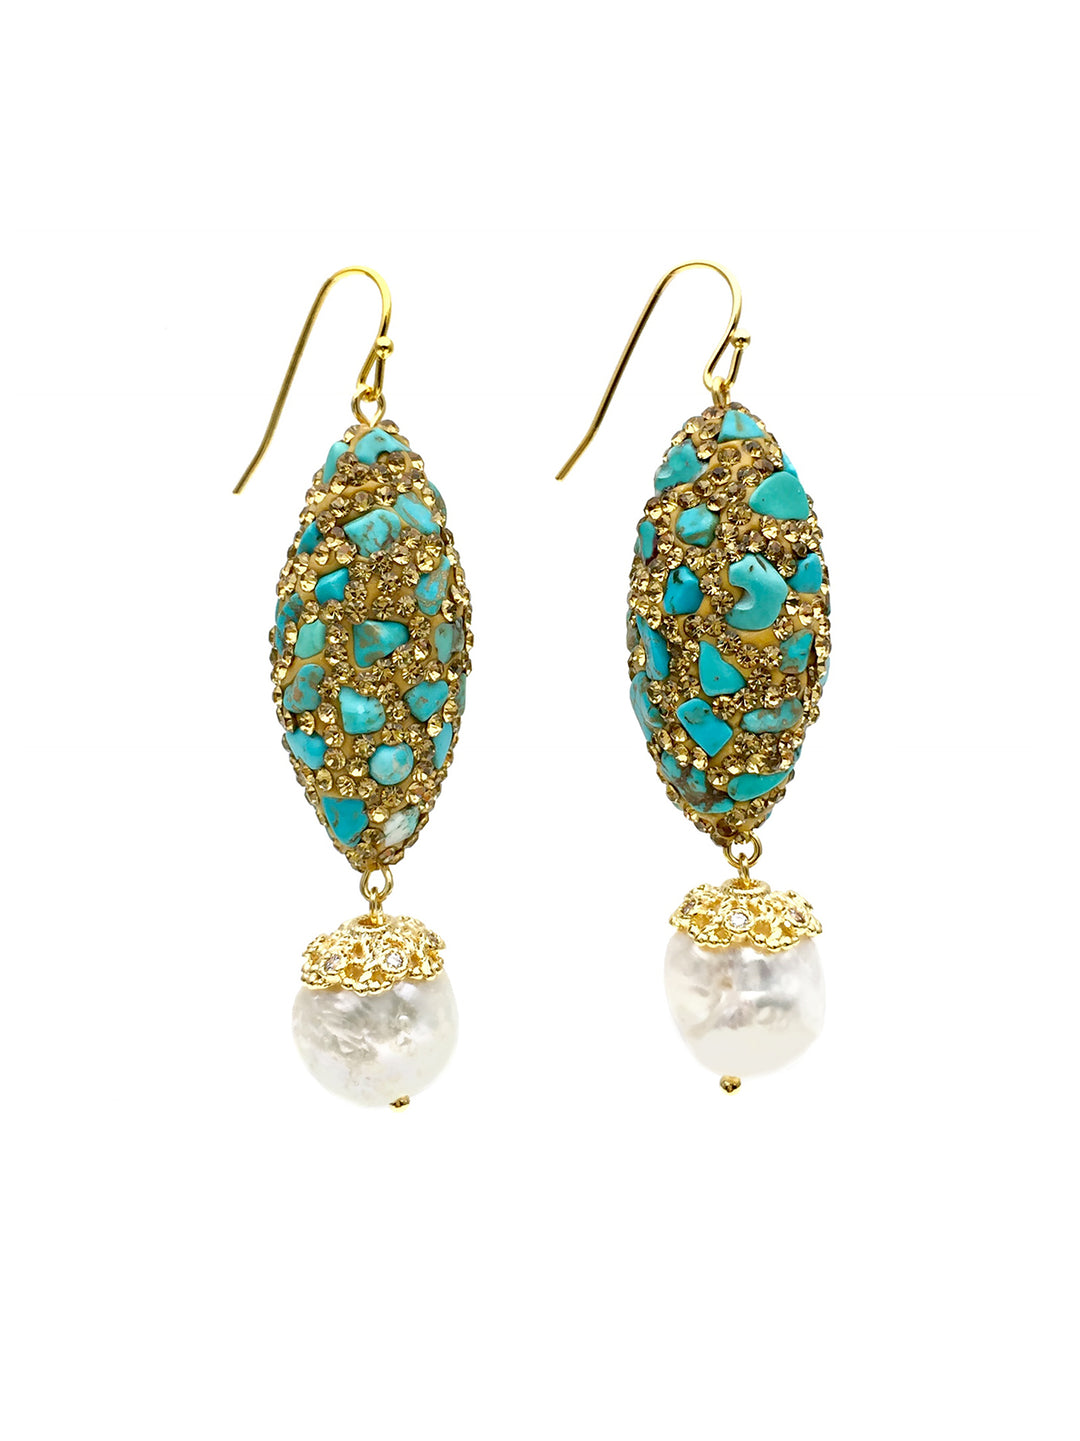 Rhinestone bordered turquoise with freshwater pearls Earrings AE019 - FARRA